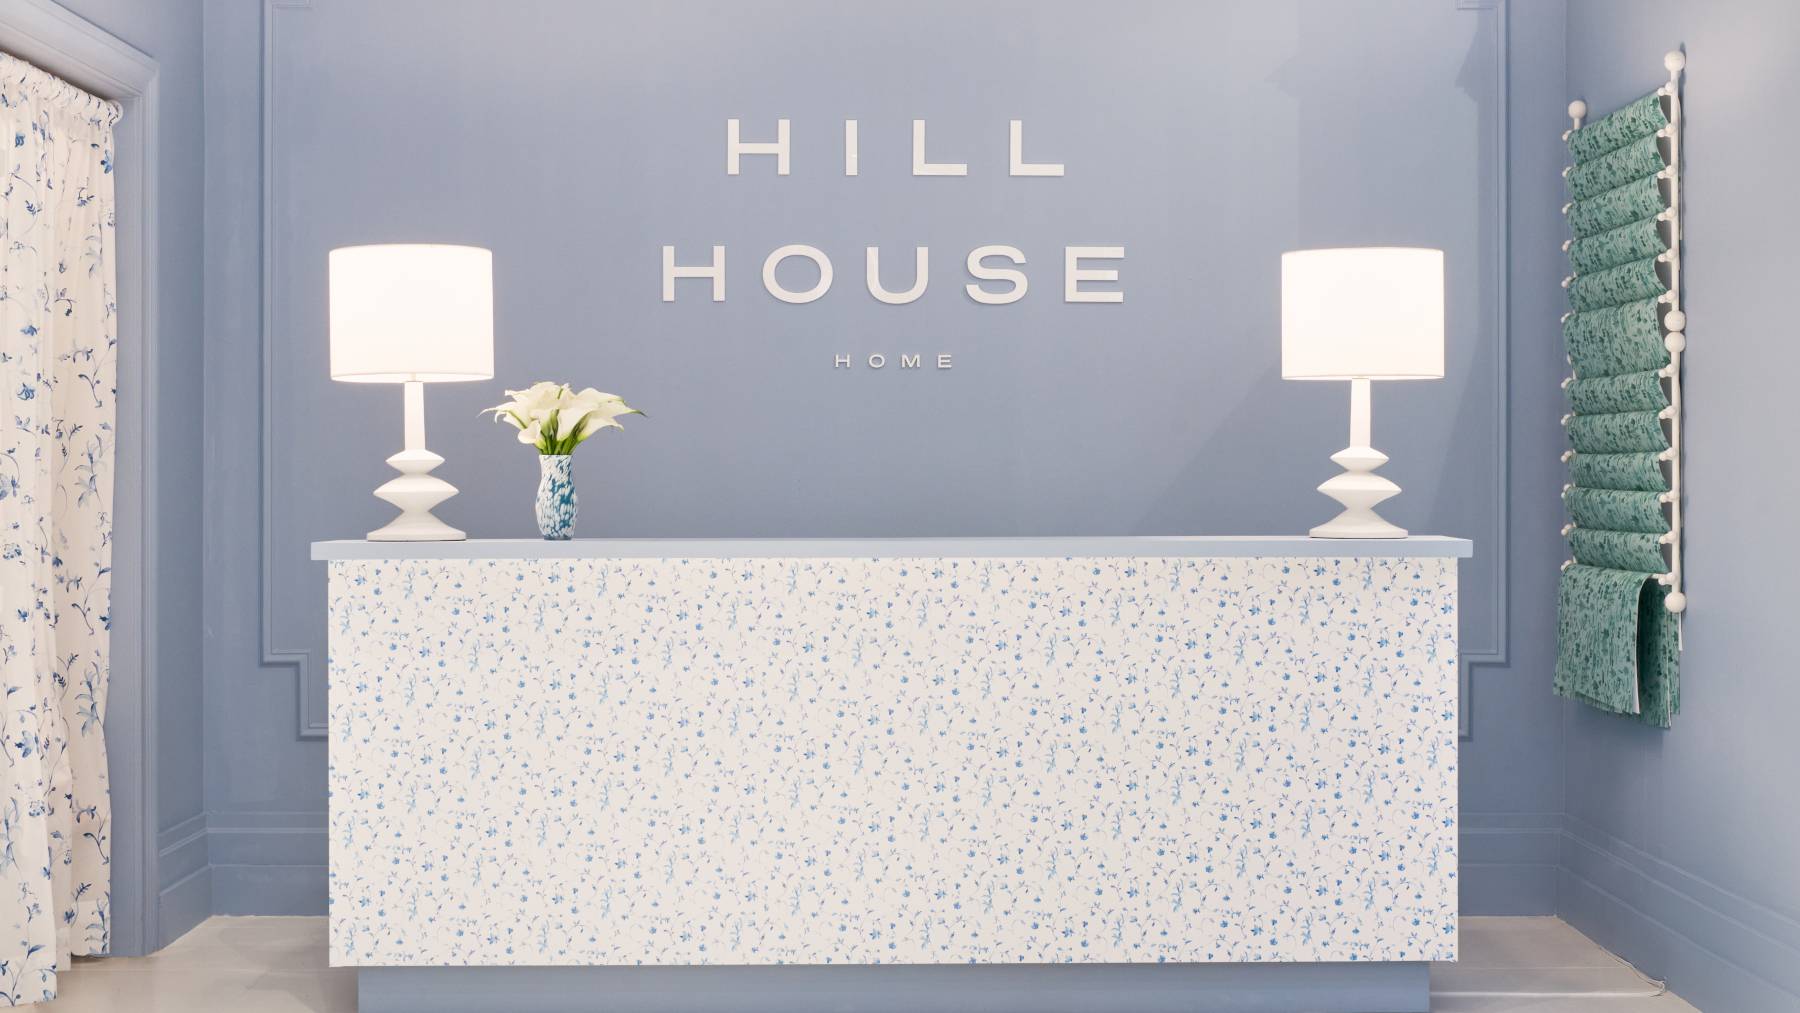 Hill House Home's holiday pop-up runs through Jan. 15, 2022. Courtesy